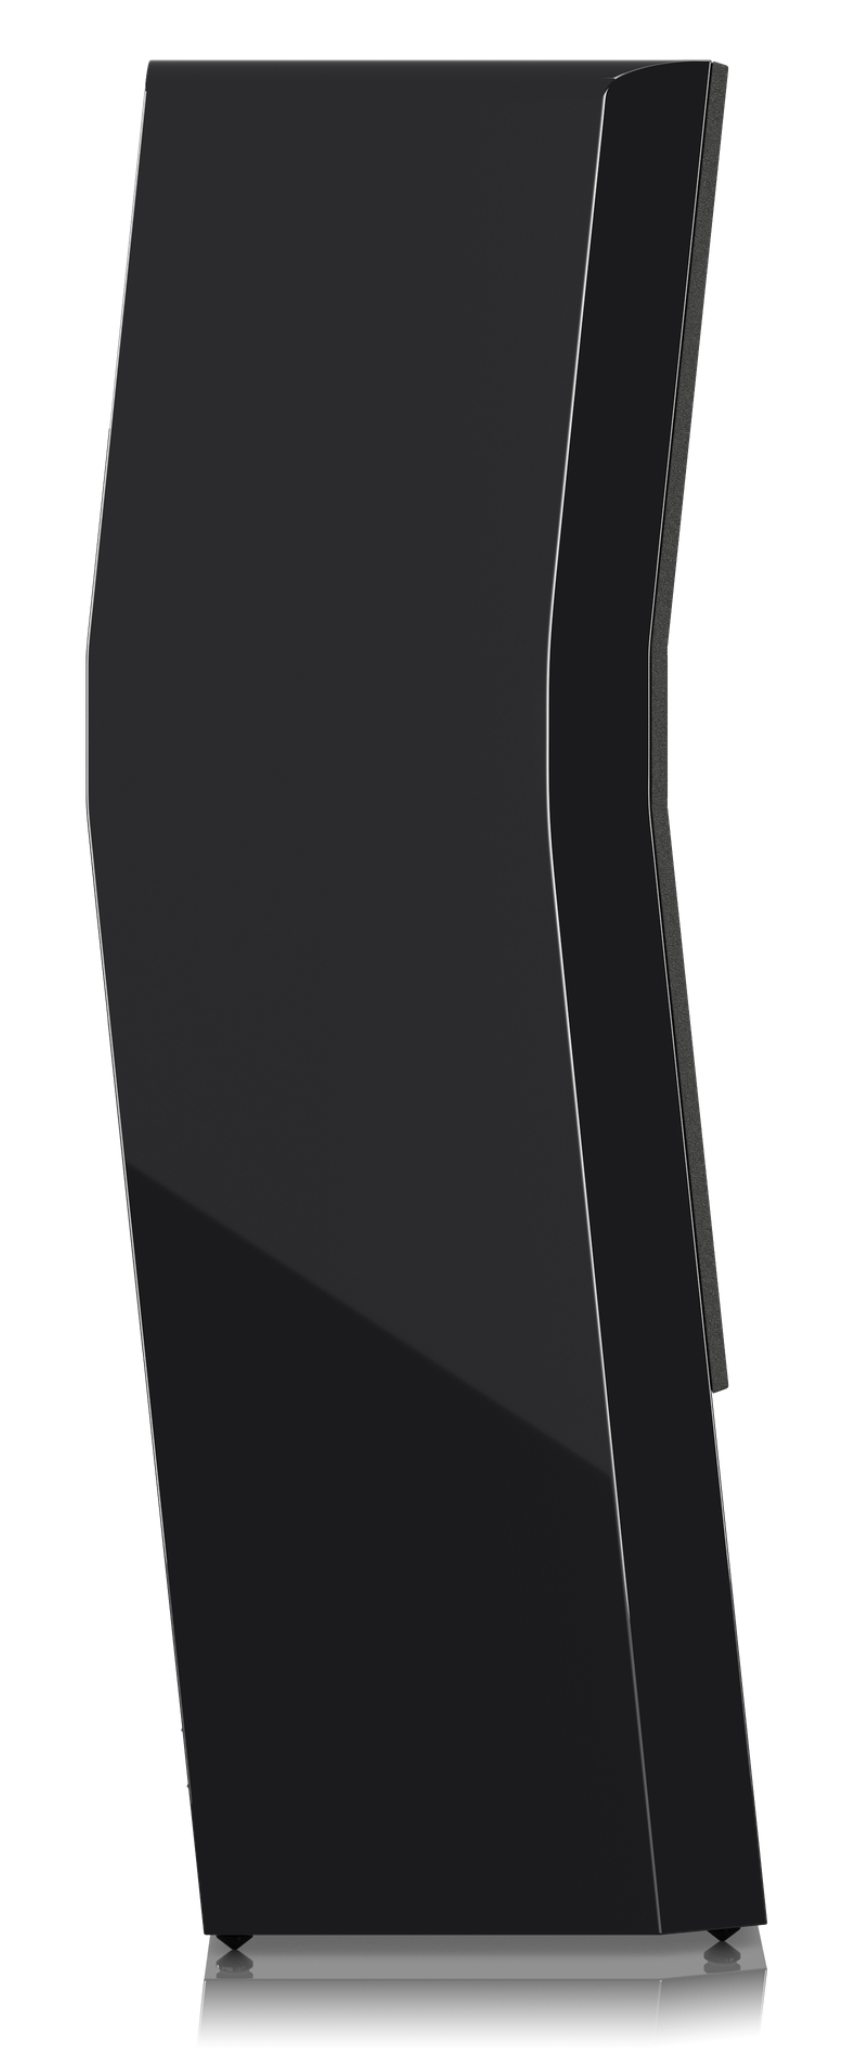 SVS Ultra Evolution Pinnacle Floorstanding Speaker, in Piano Black Gloss, individual profile